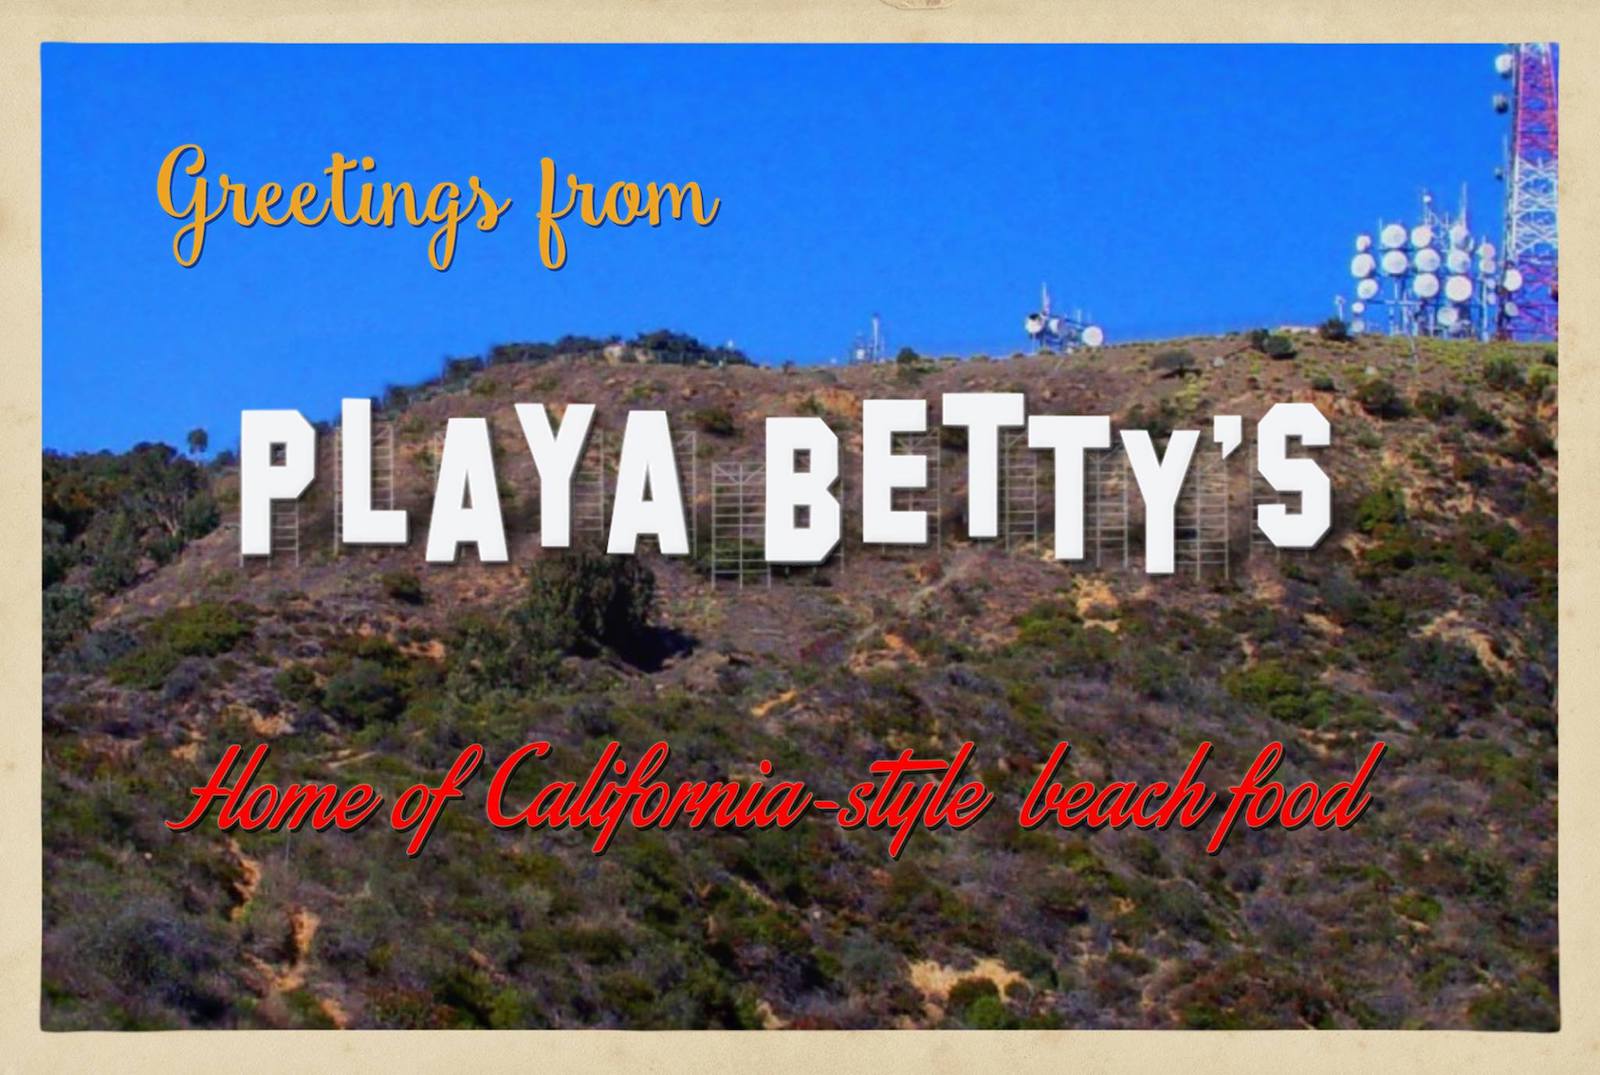 Playa Betty’s